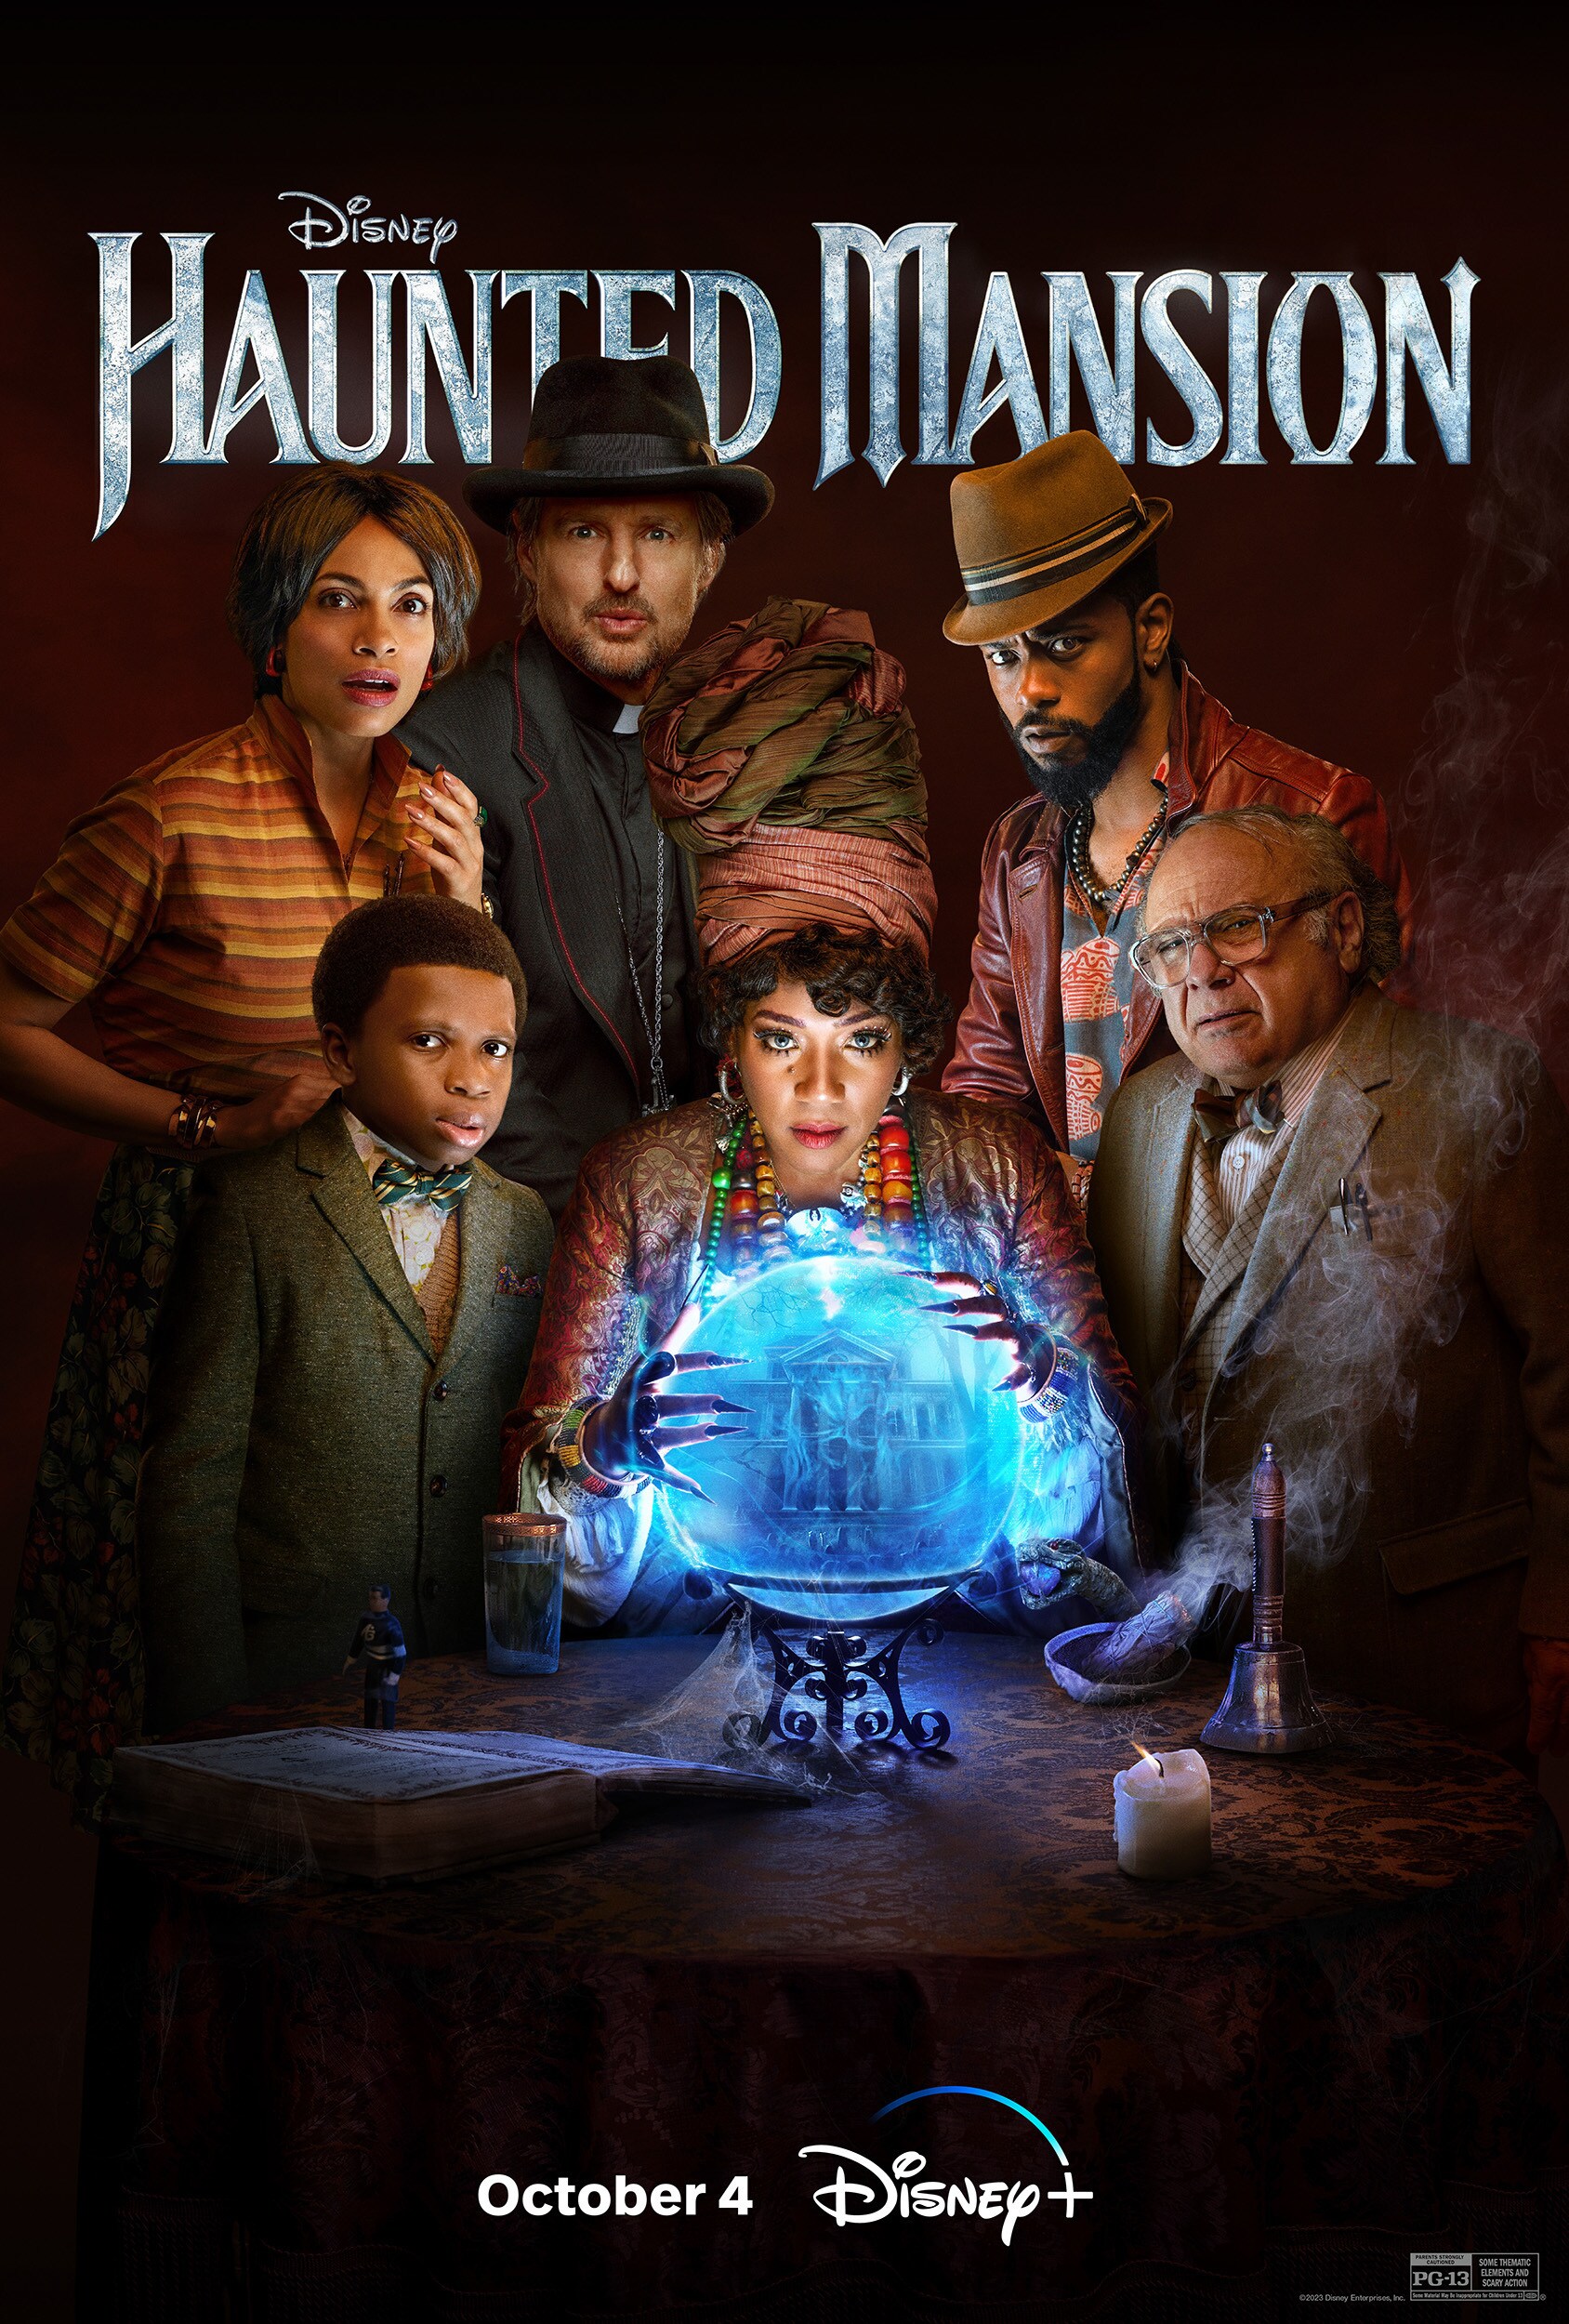 Disney's Frighteningly Fun Adventure “Haunted Mansion” Debuts On